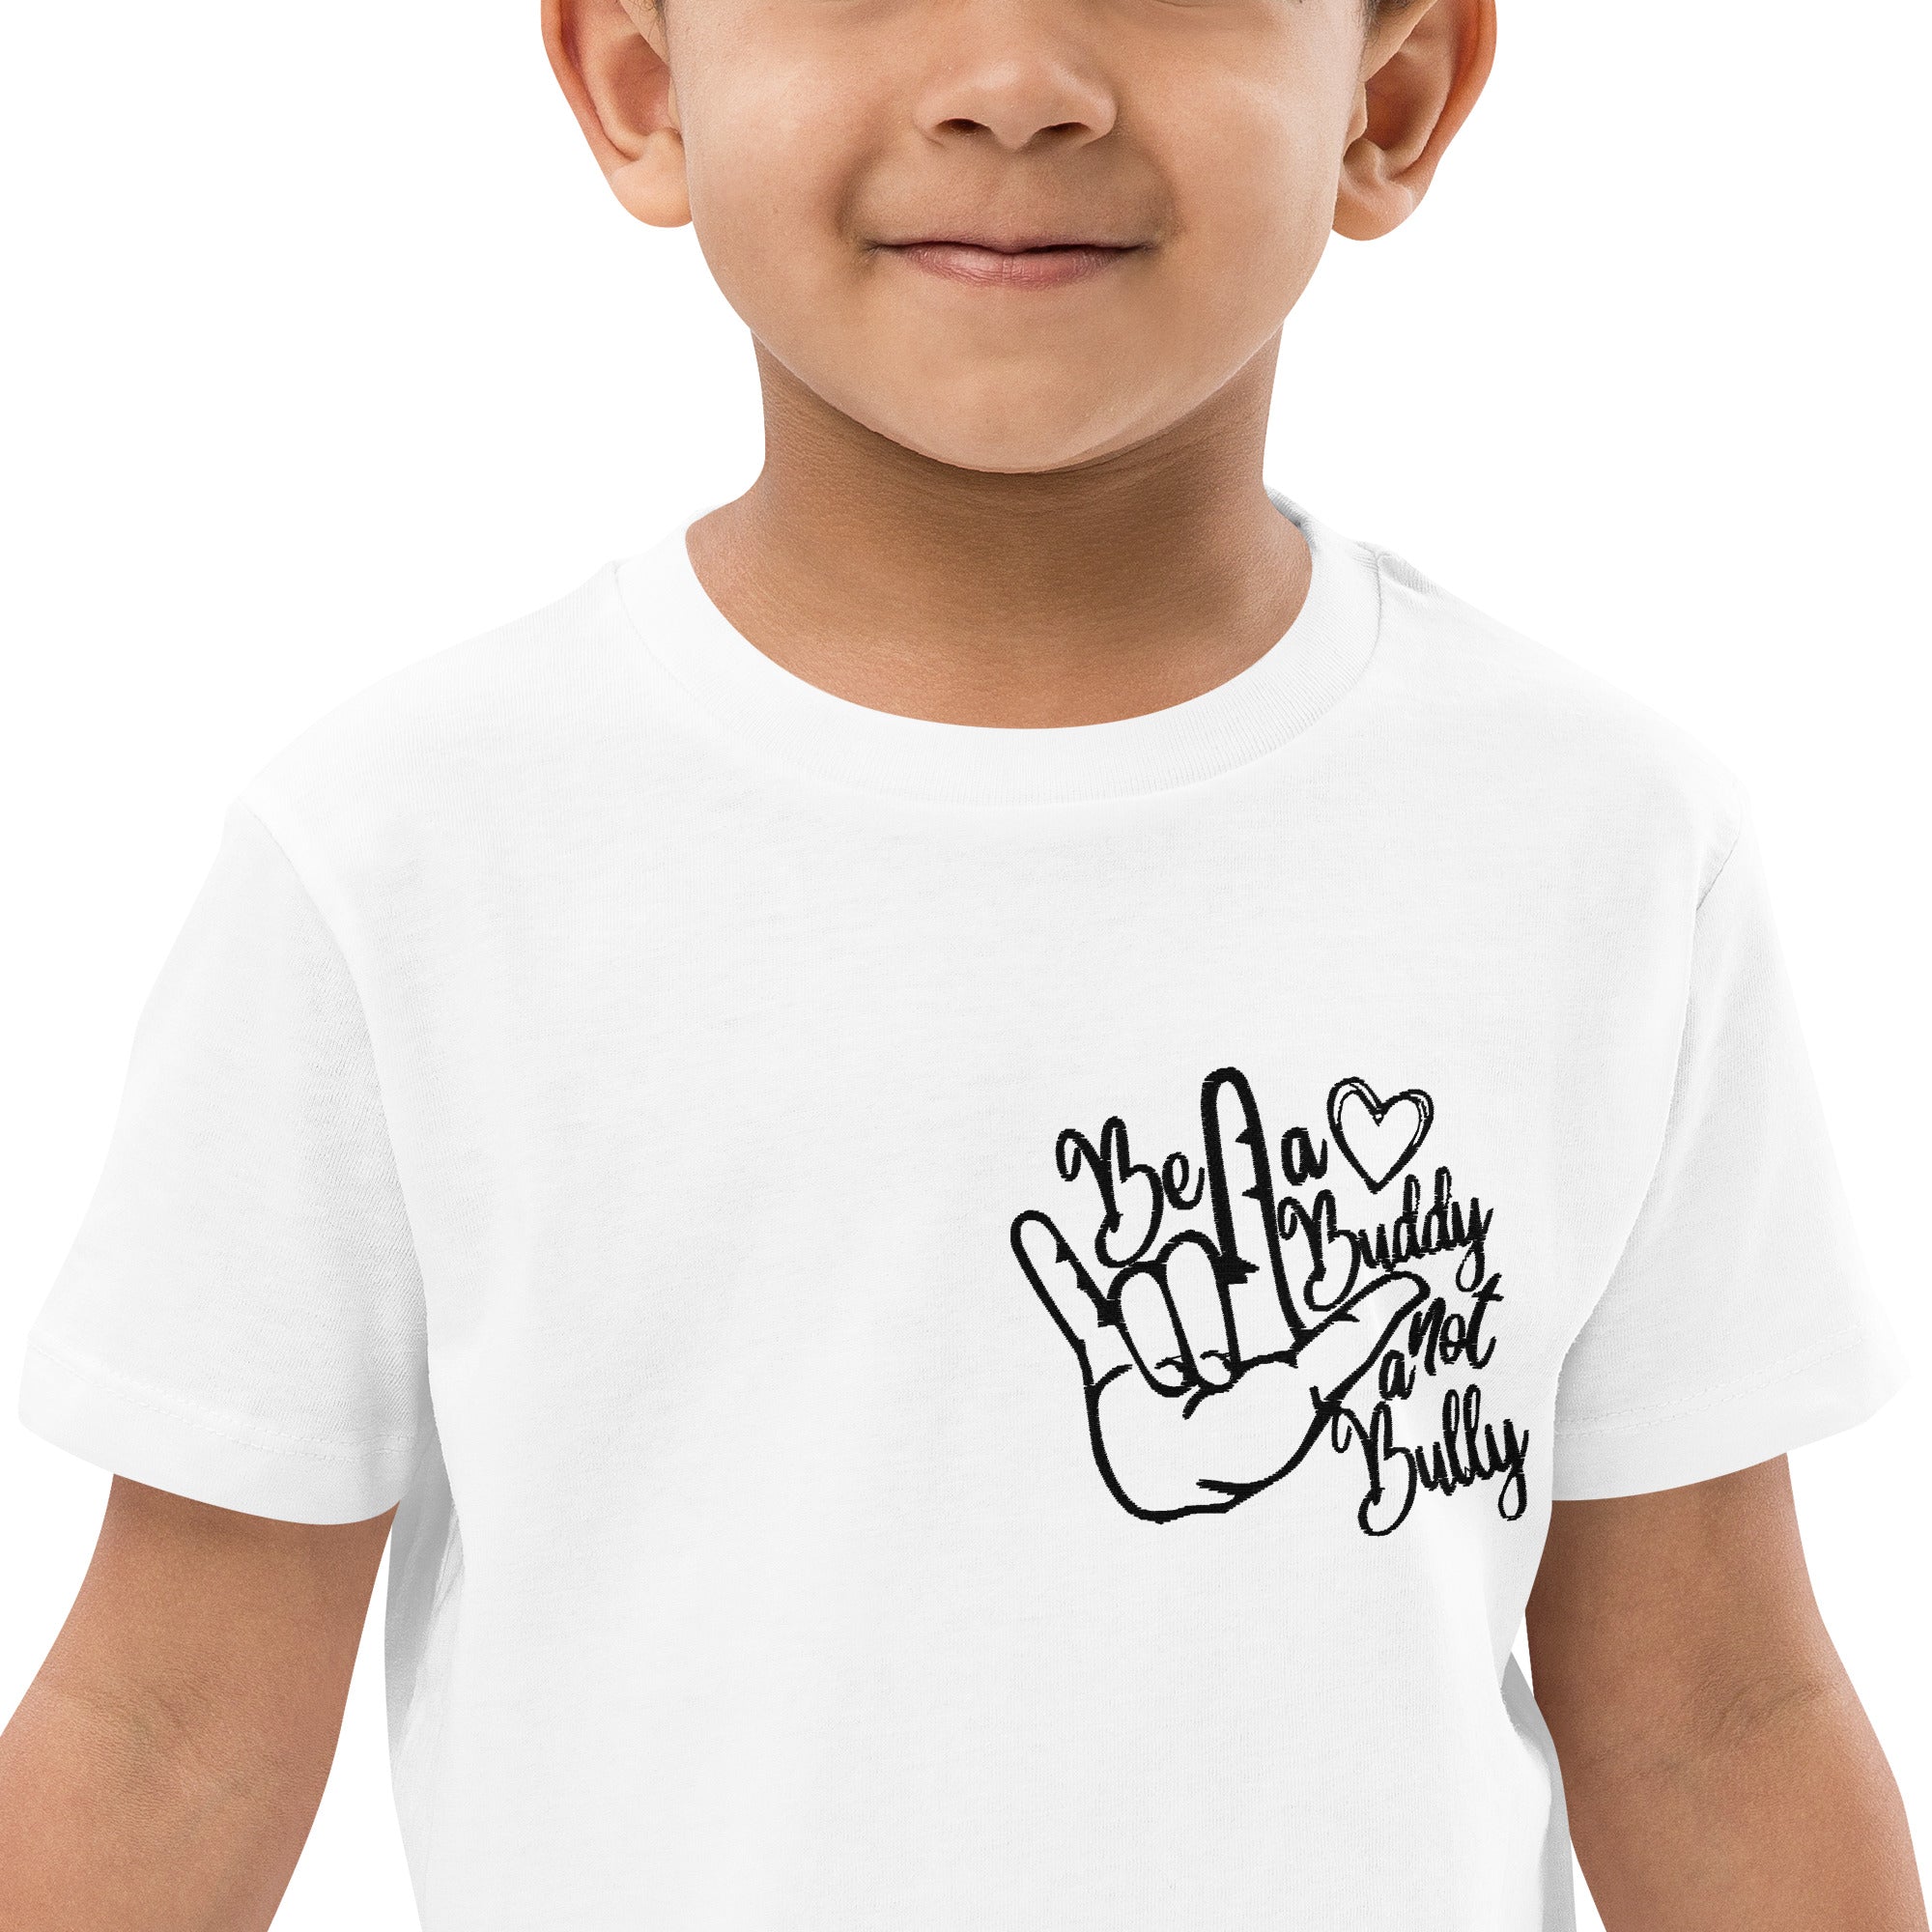 Be a Buddy Not a Bully [White] Organic Cotton Kids T-Shirt